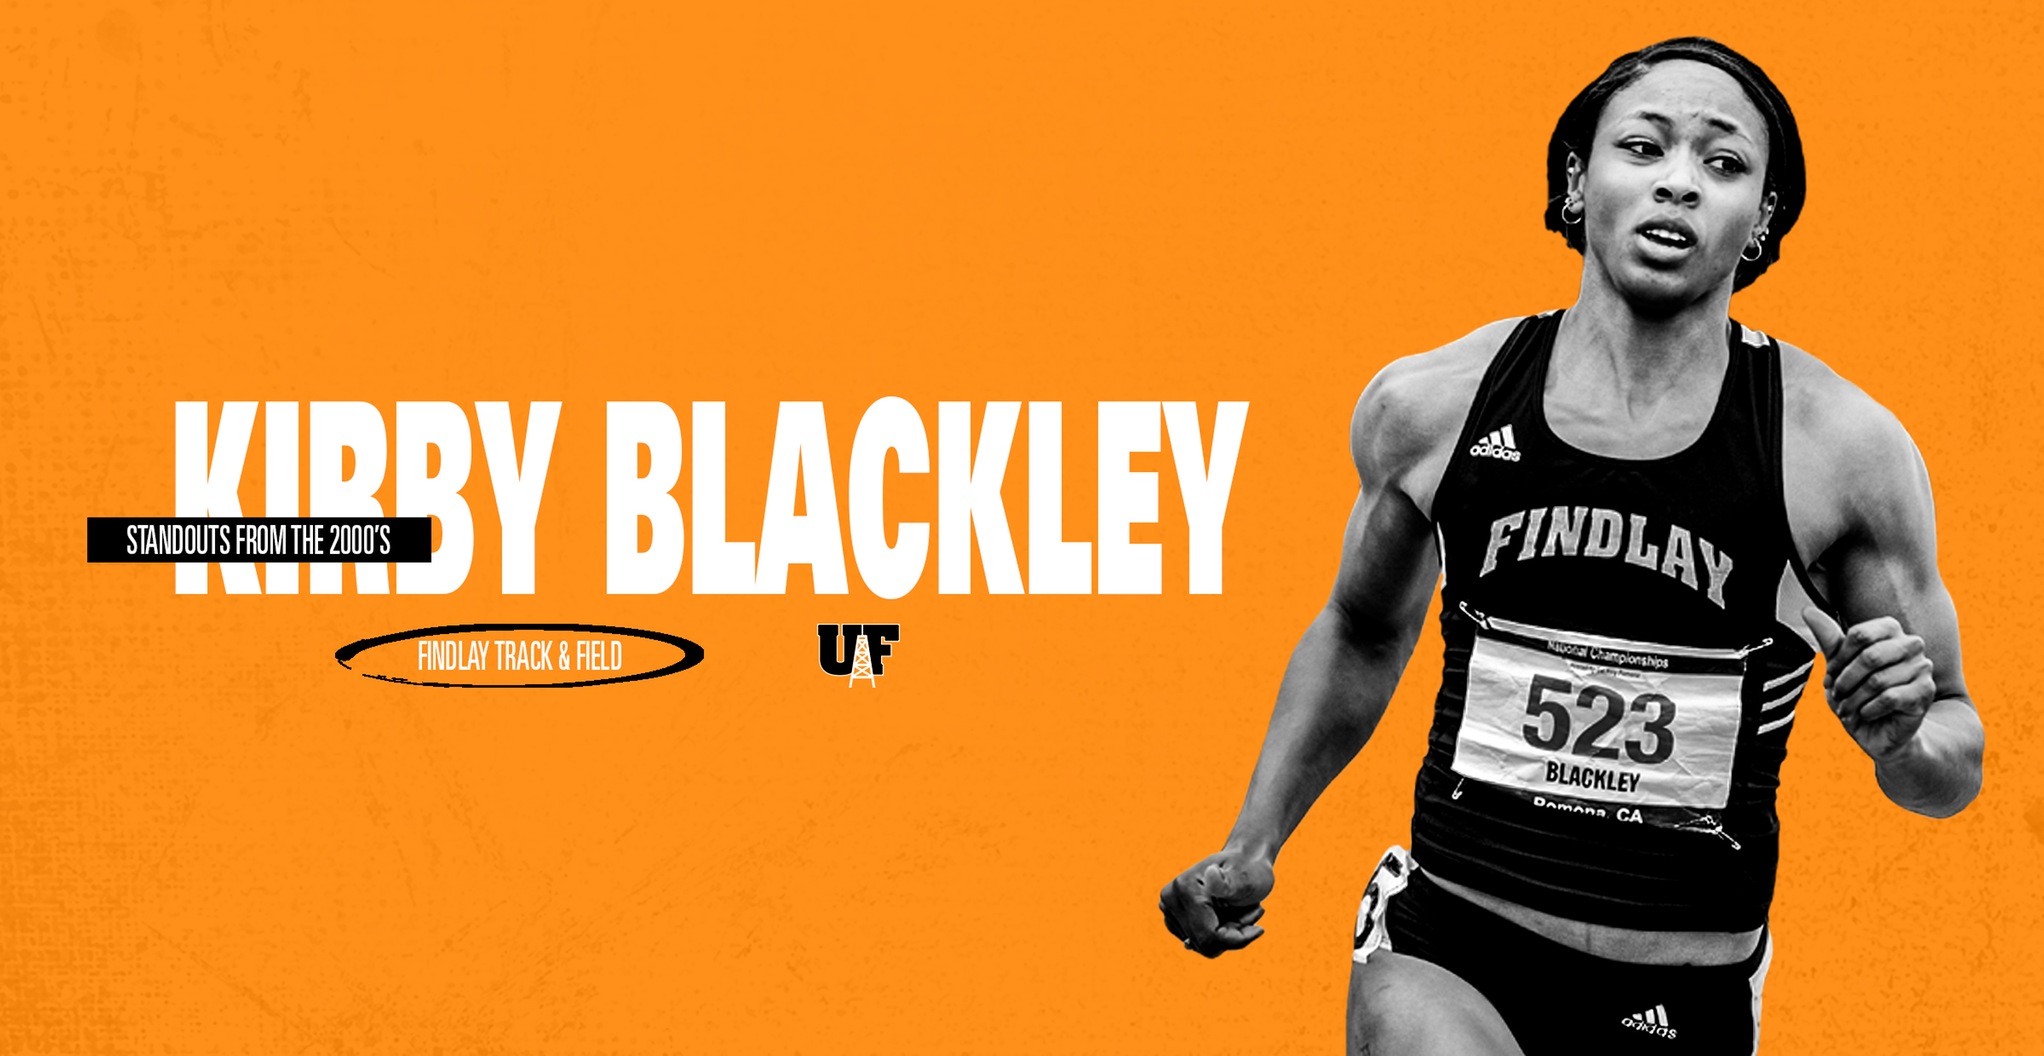 Kirby Blackley, women's track athlete